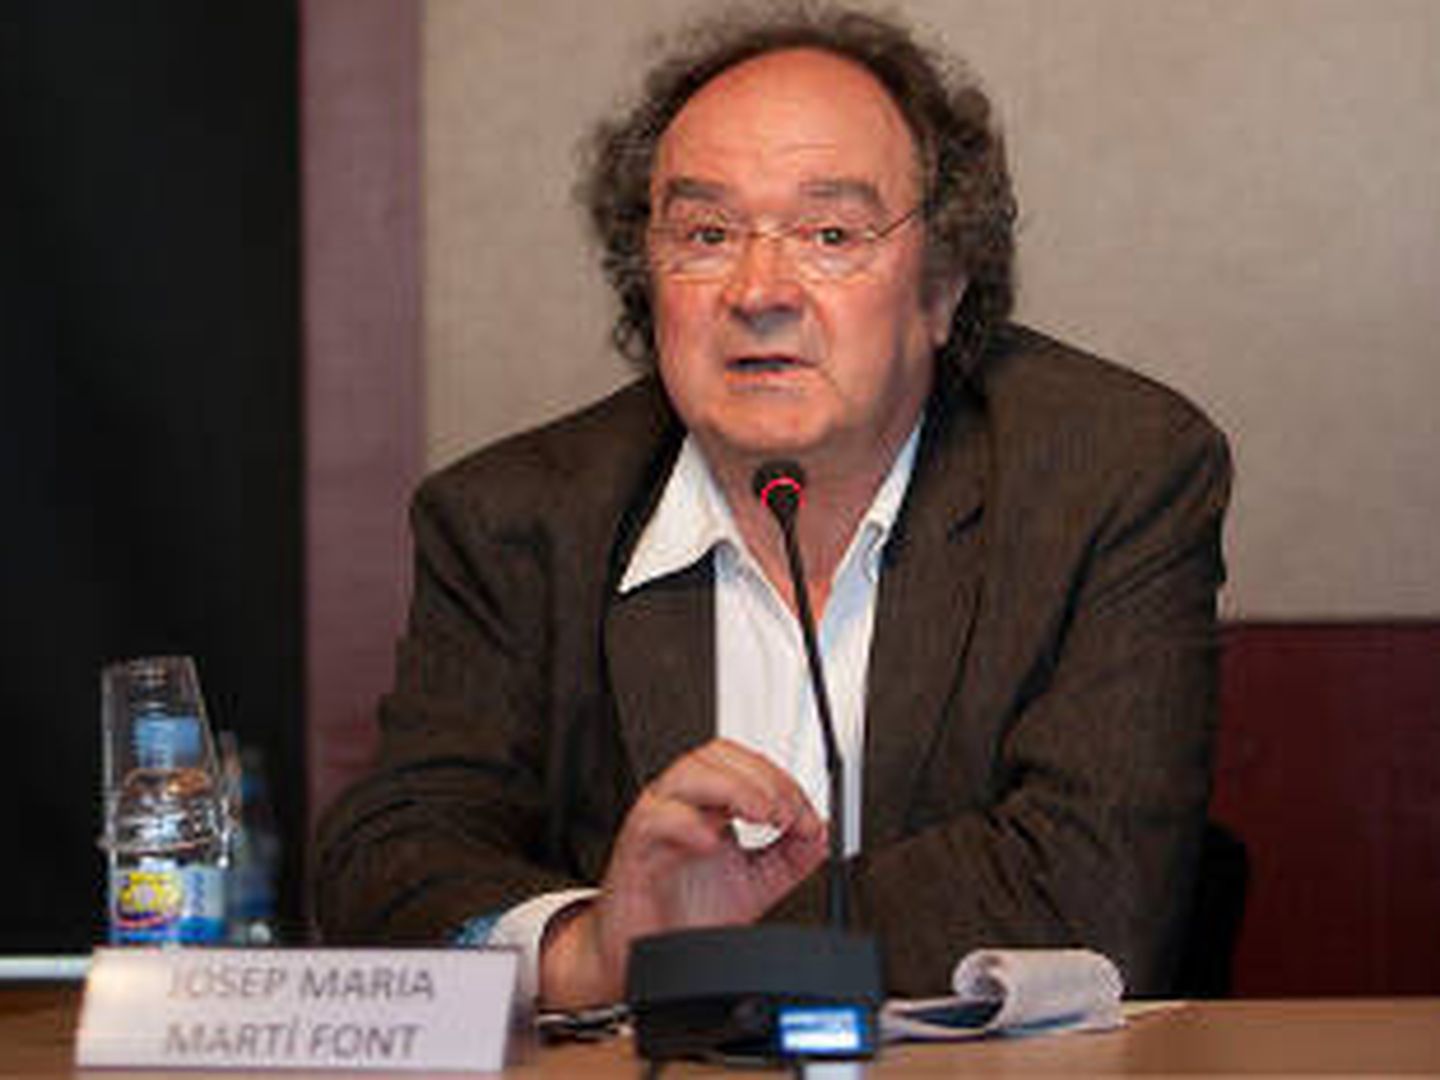 Josep María Martí Font. (CCCB)